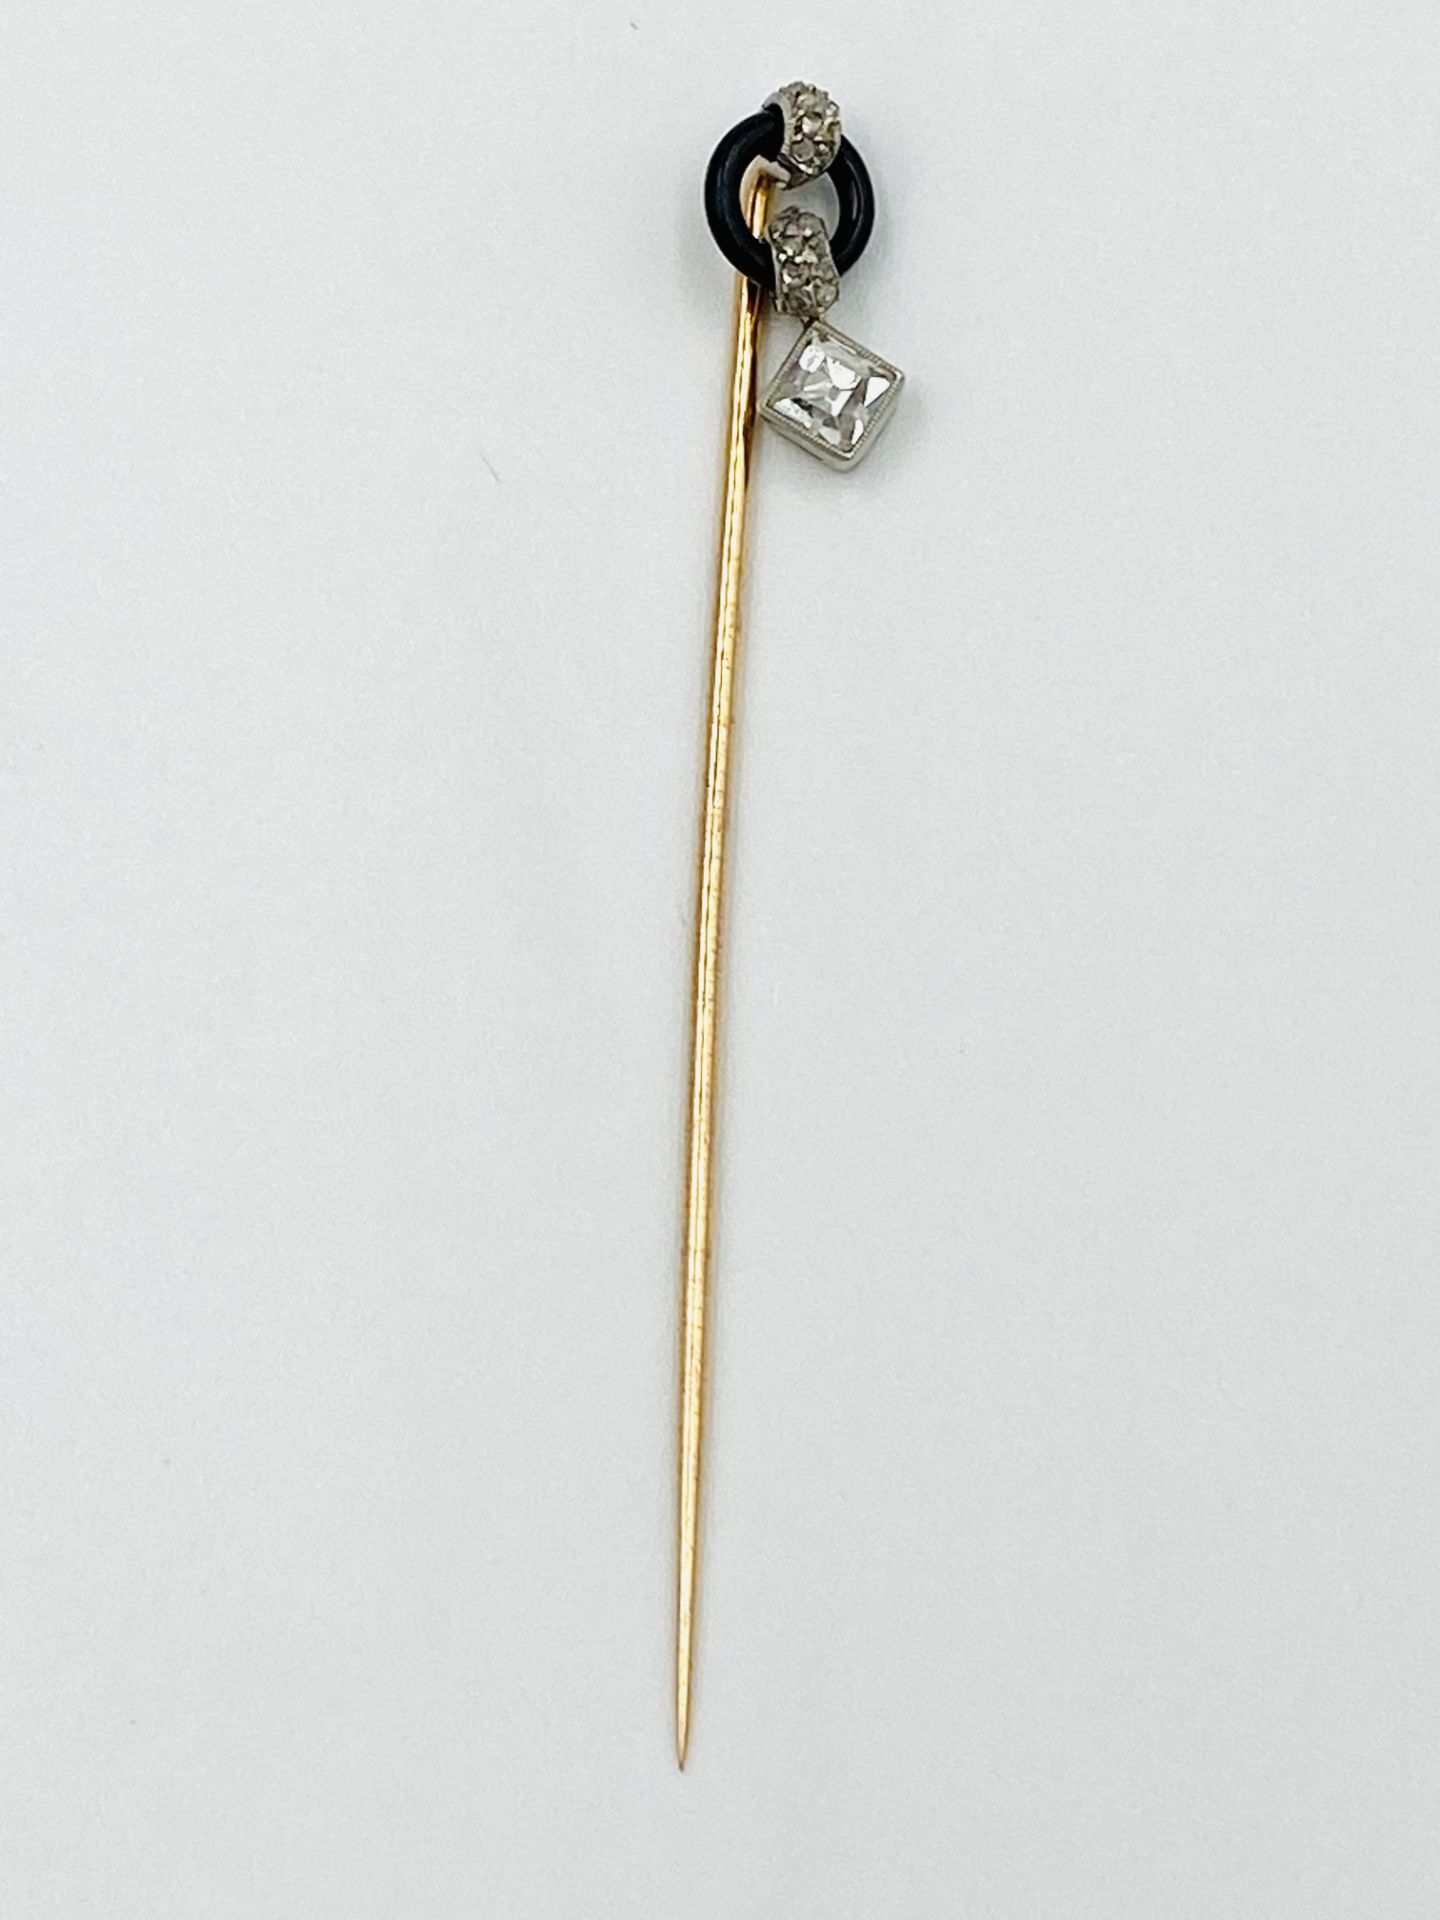 Cartier Paris, gold, onyx and diamond stick pin